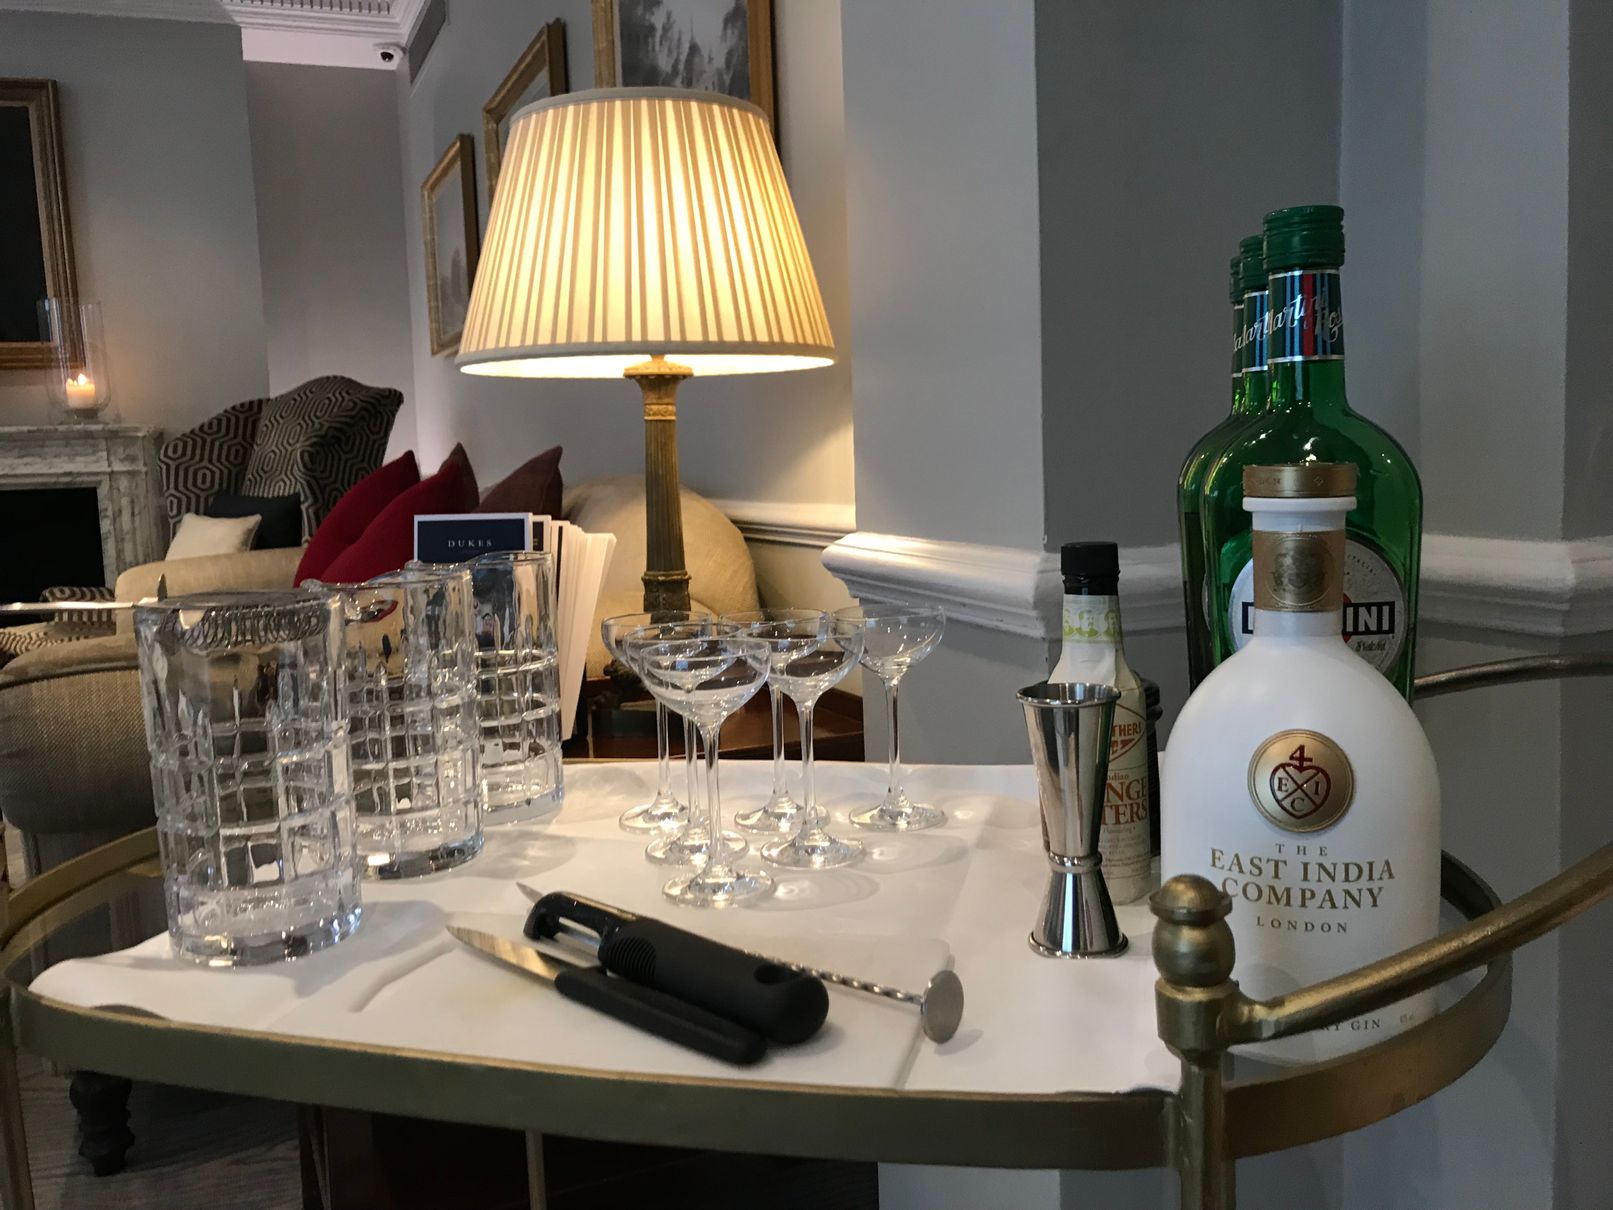 East India Company Gin Martini with Dukes London Afternoon Tea